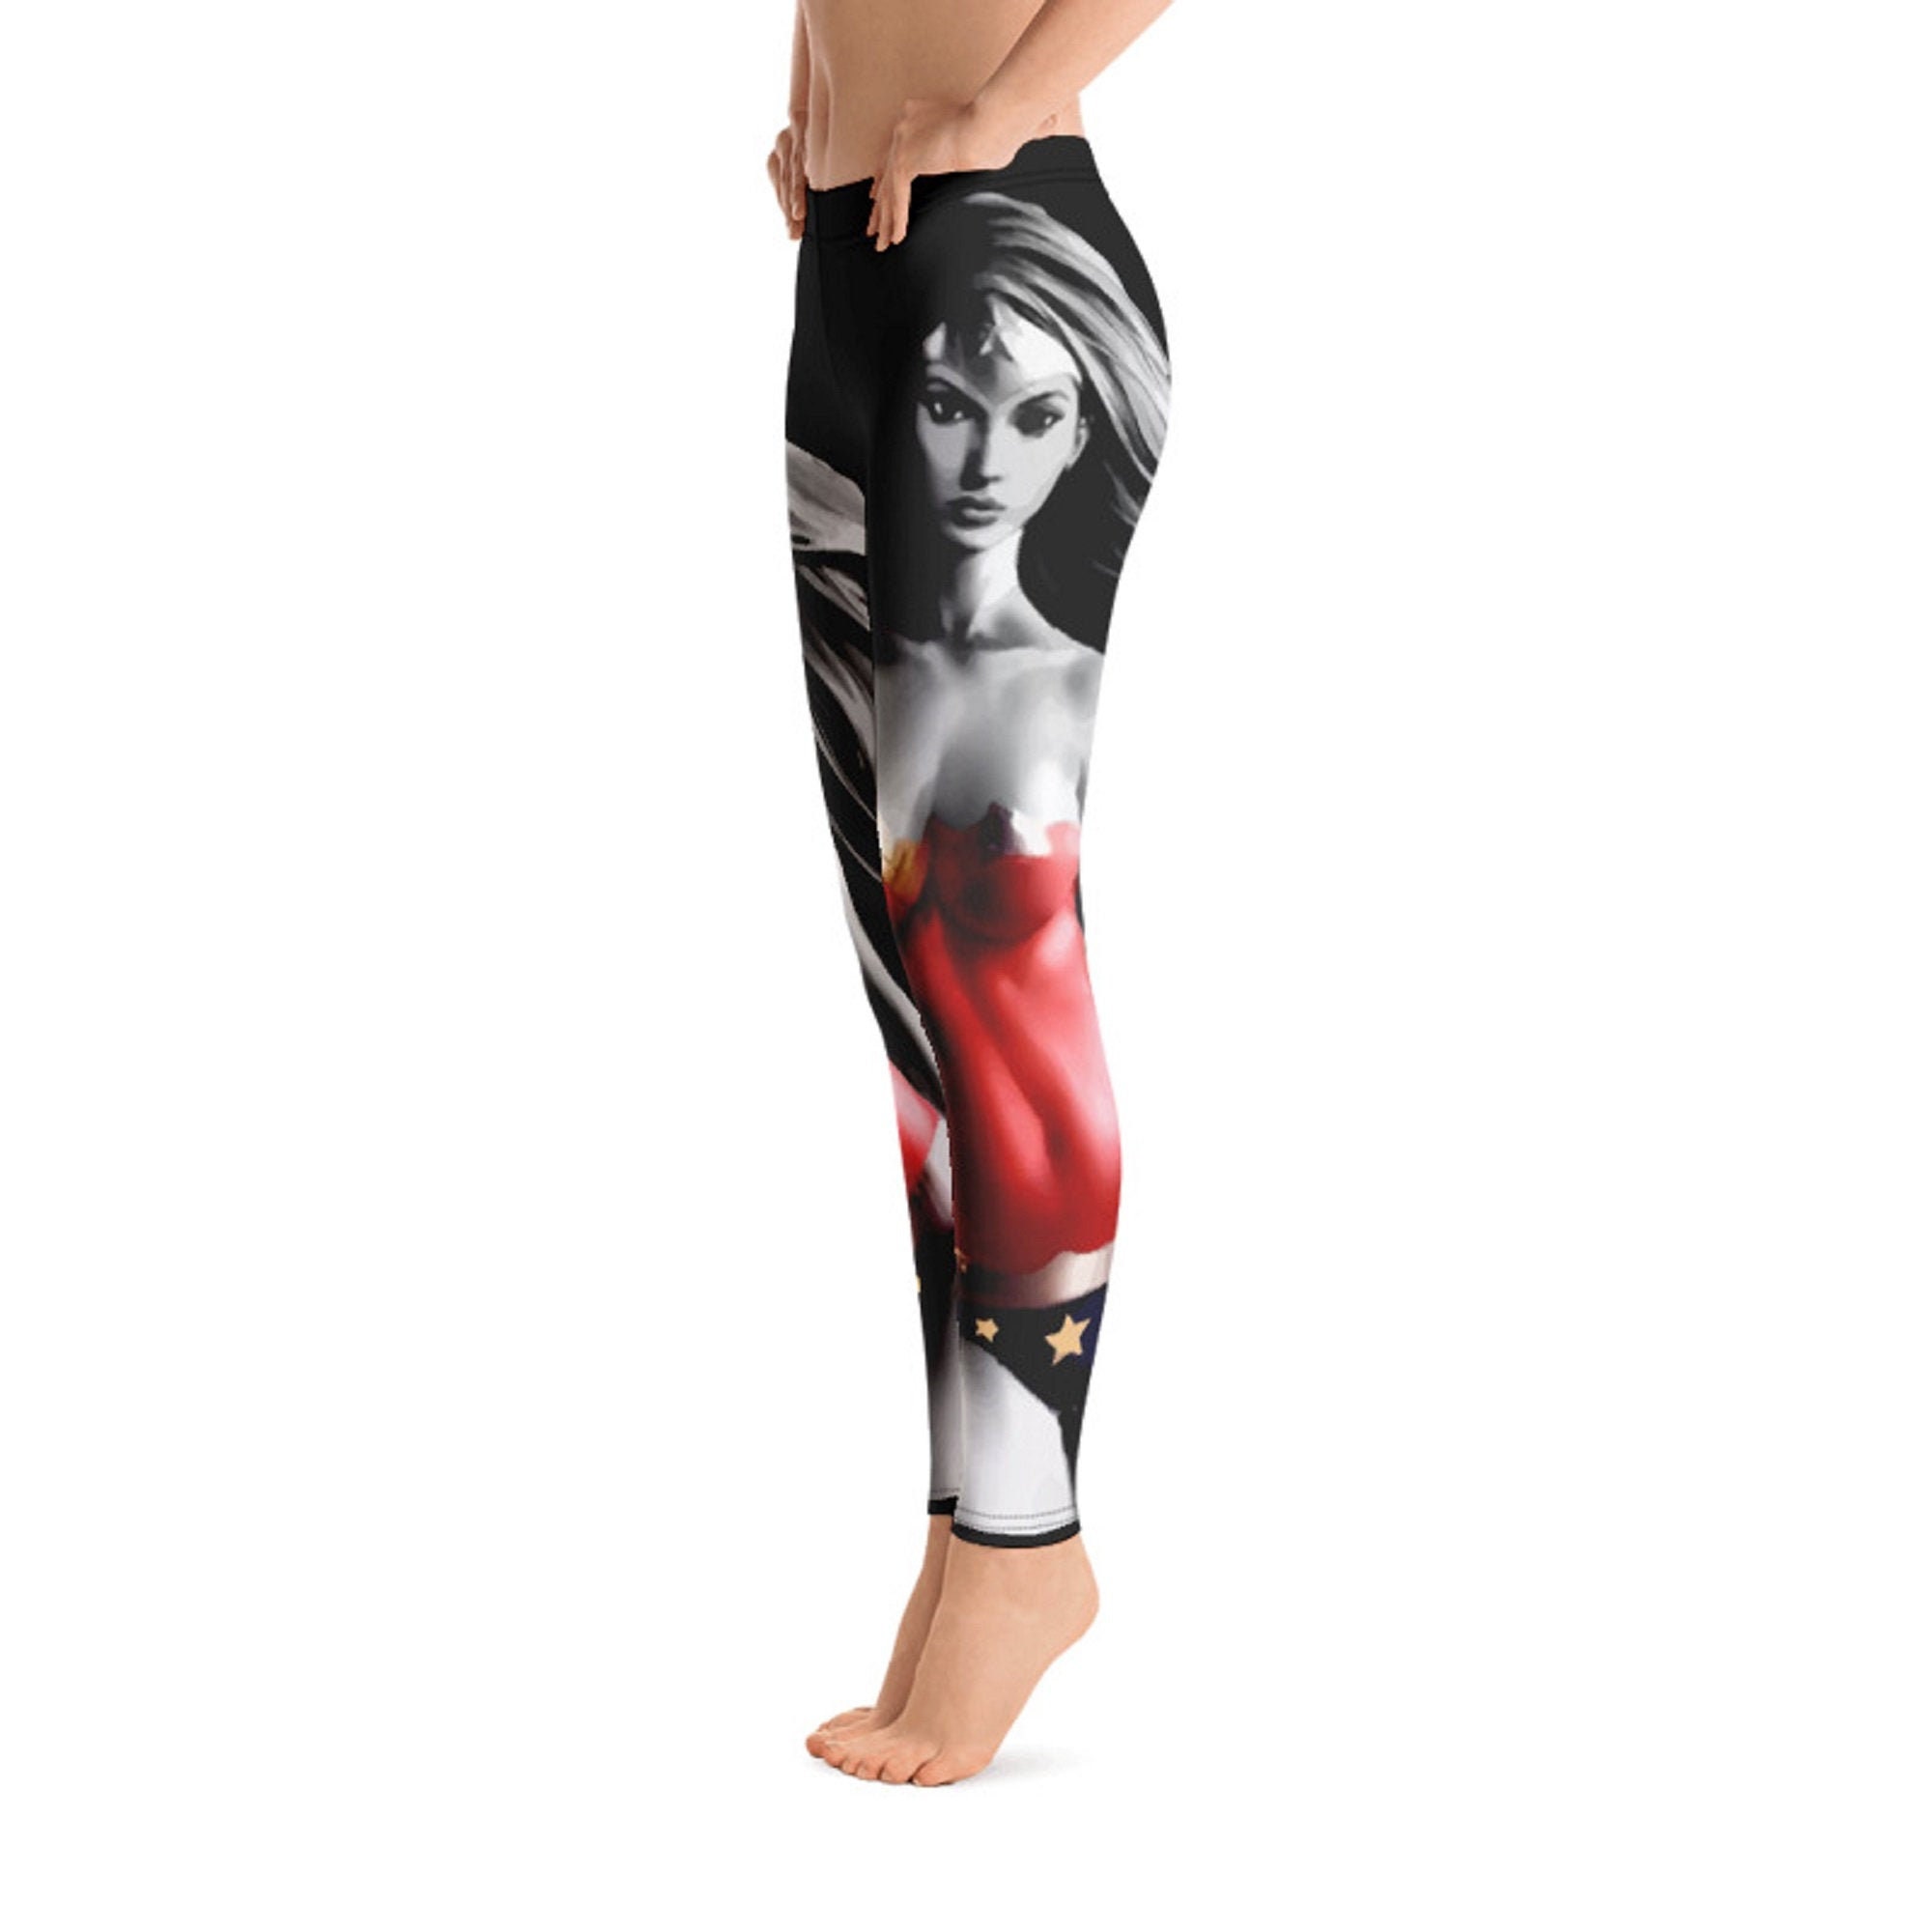 Superhero Pop Culture Yoga Fitness Leggings Stretchy Athletic Meggings  Superhero Style Body Paint Photo Trendy Spring Break Beachwear 